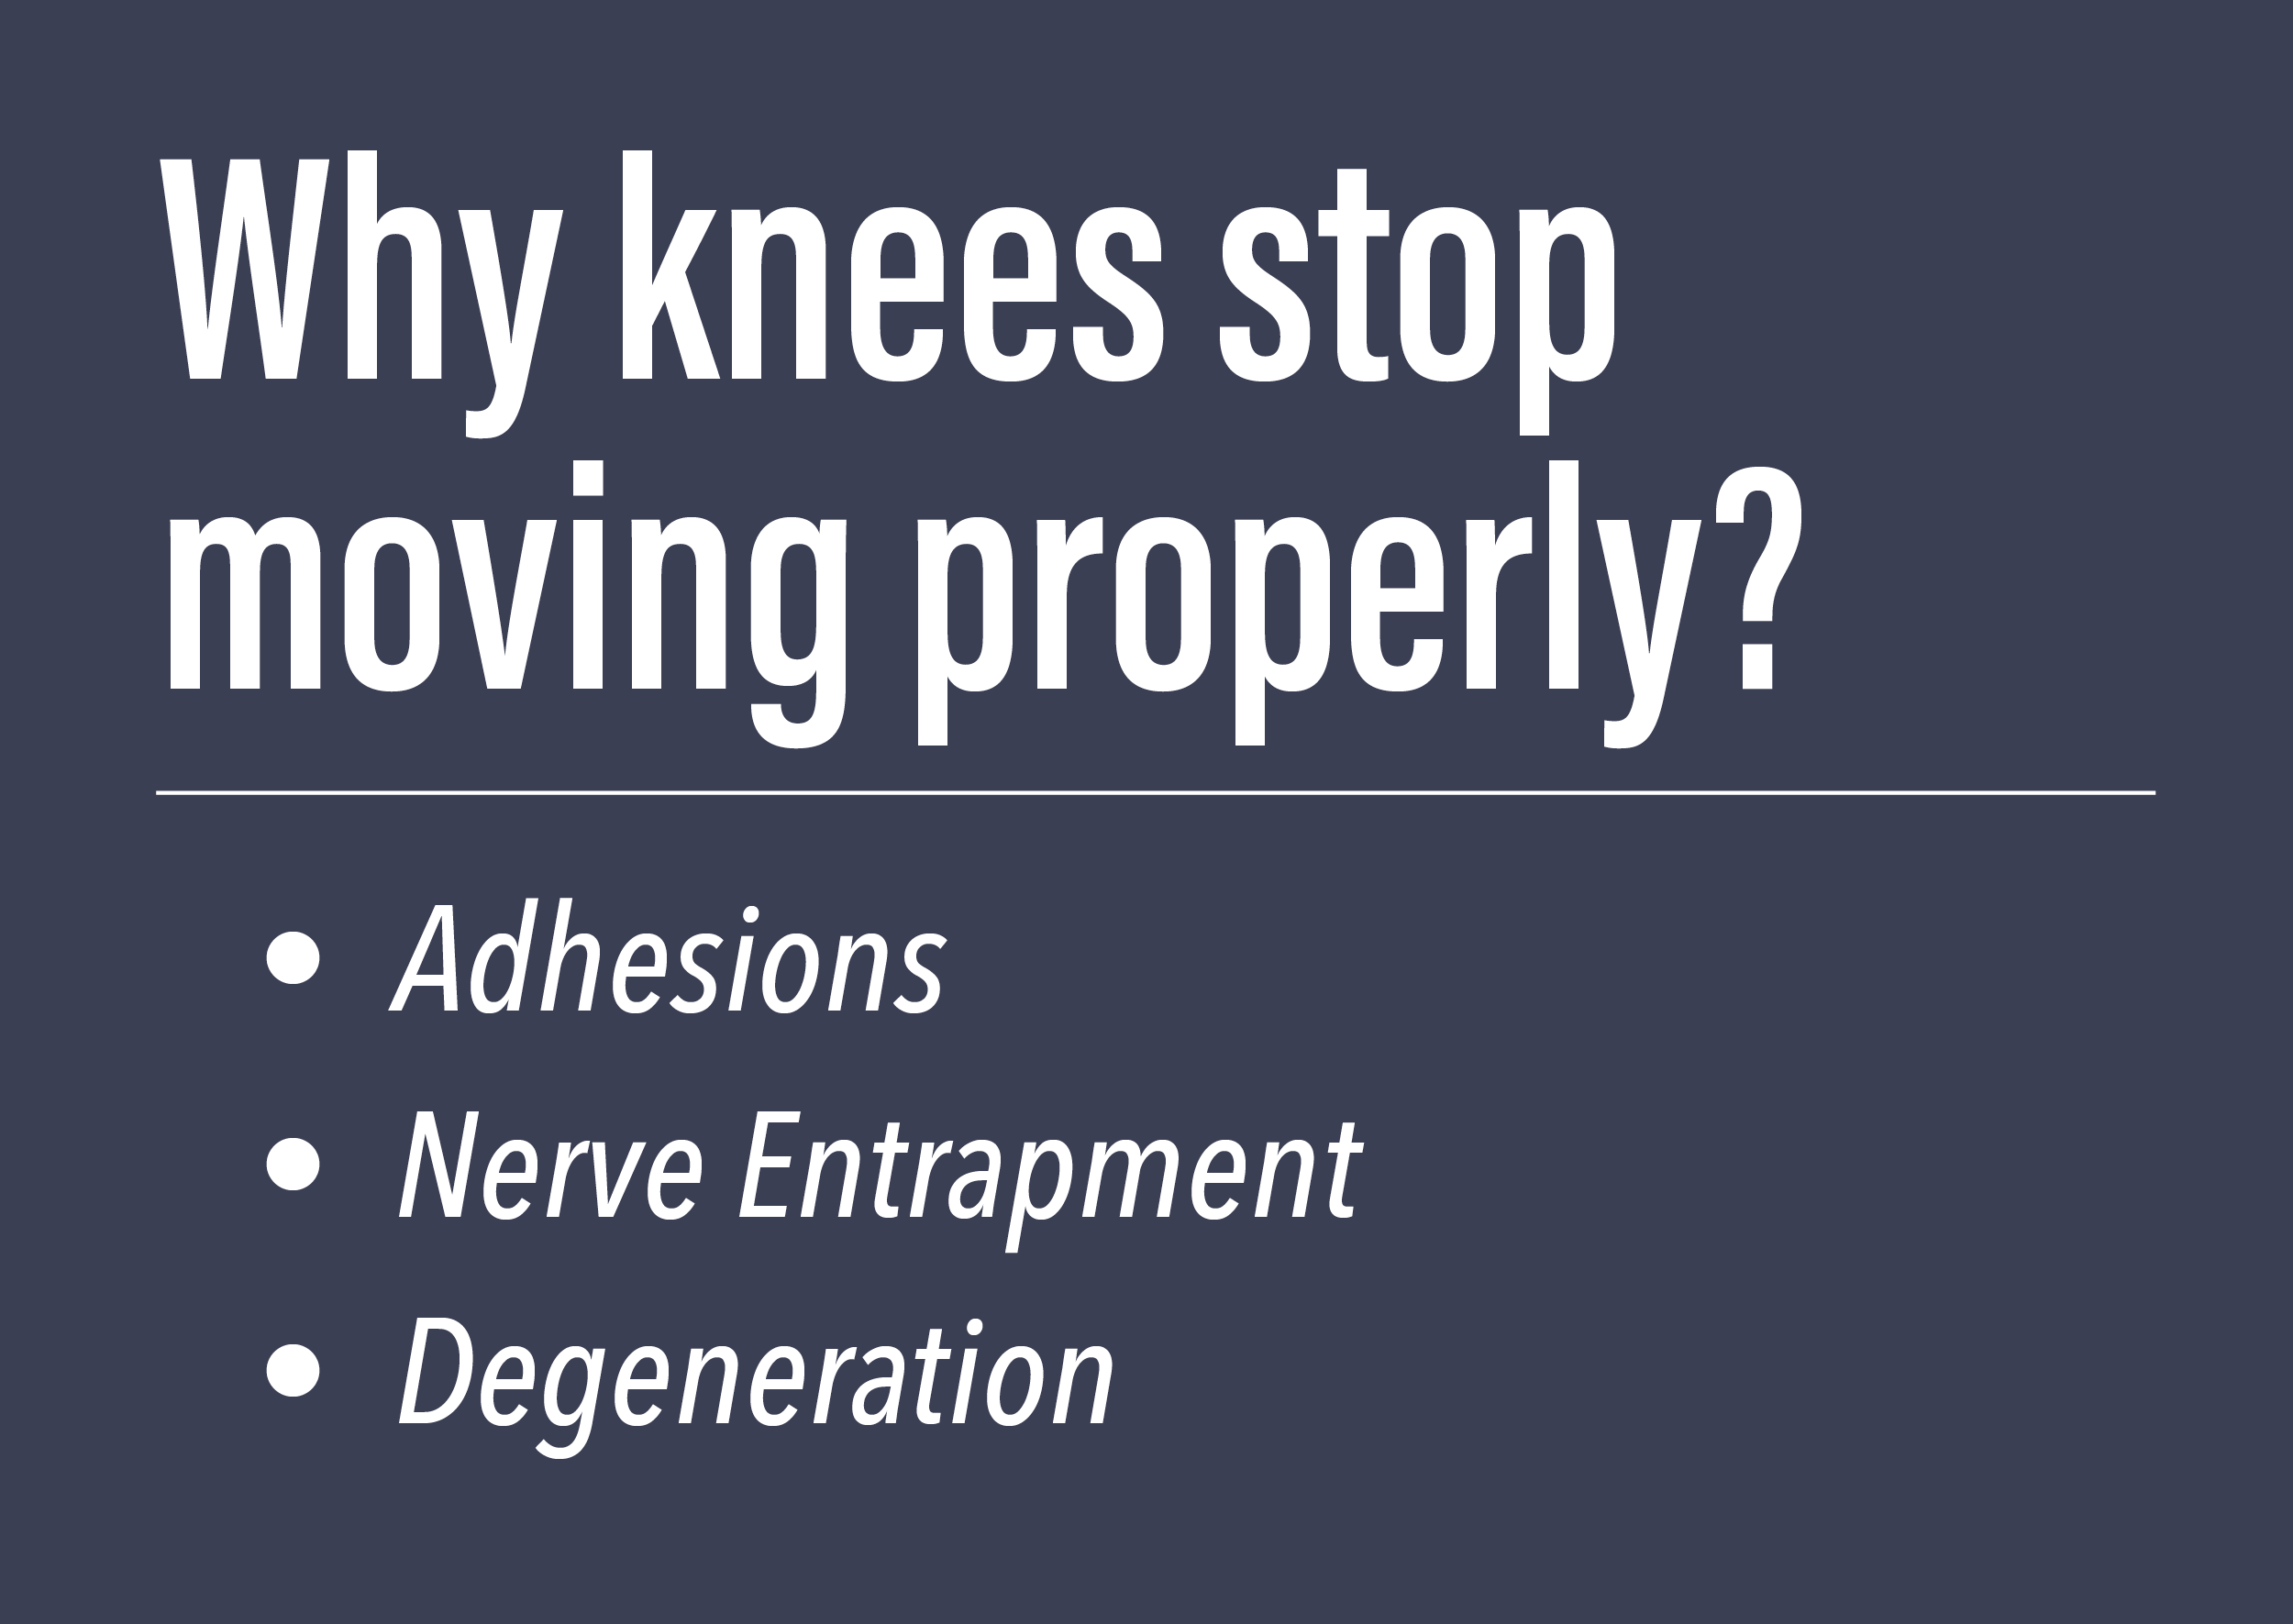 knee pain causes